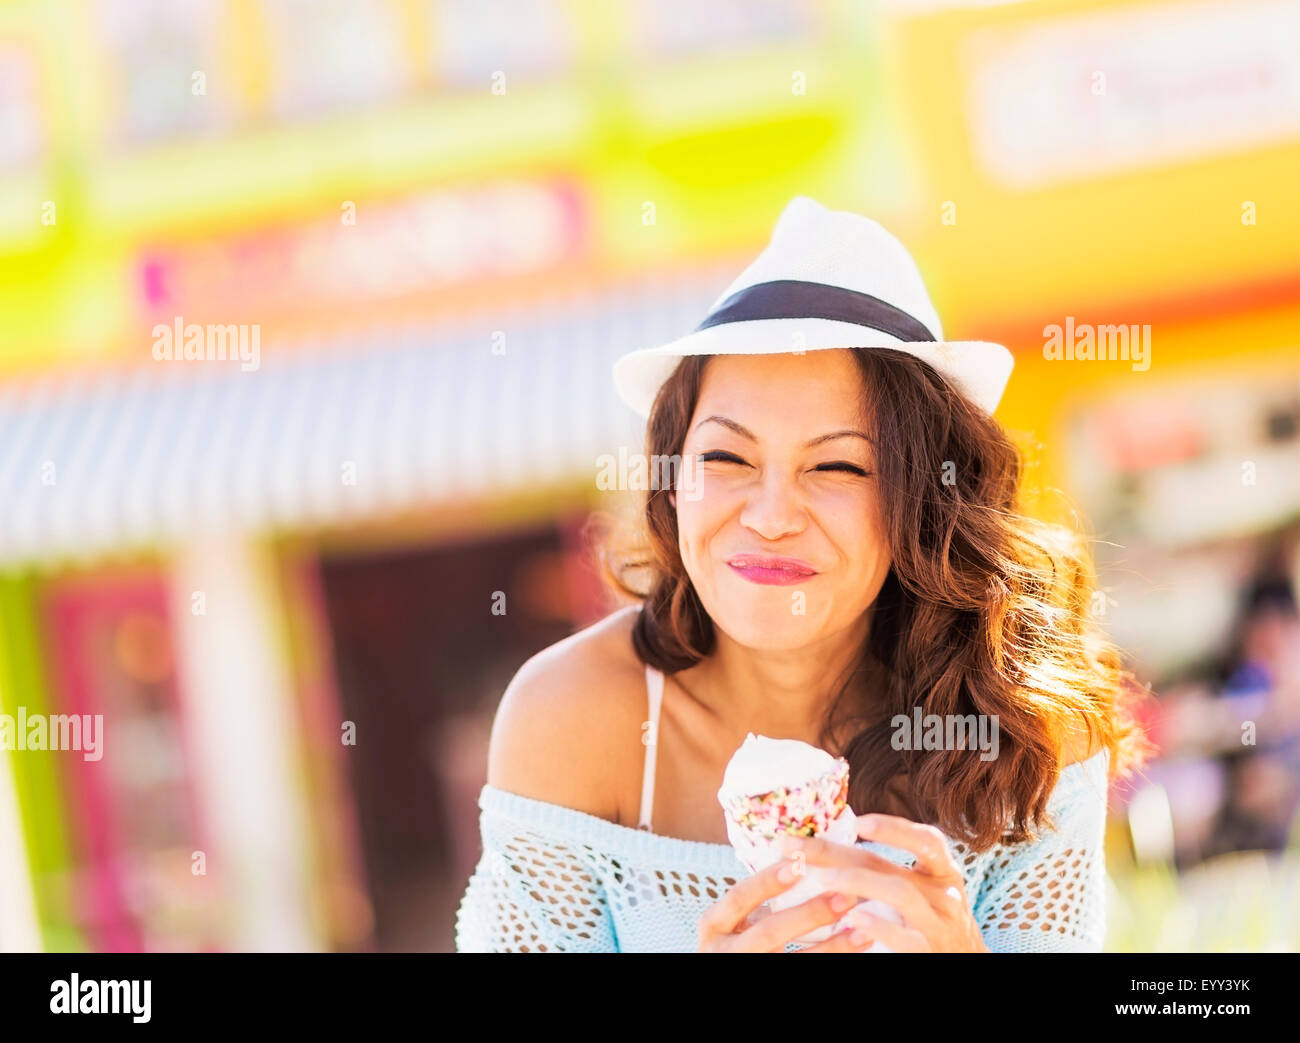 Chinese woman eating ice cream cone Stock Photo